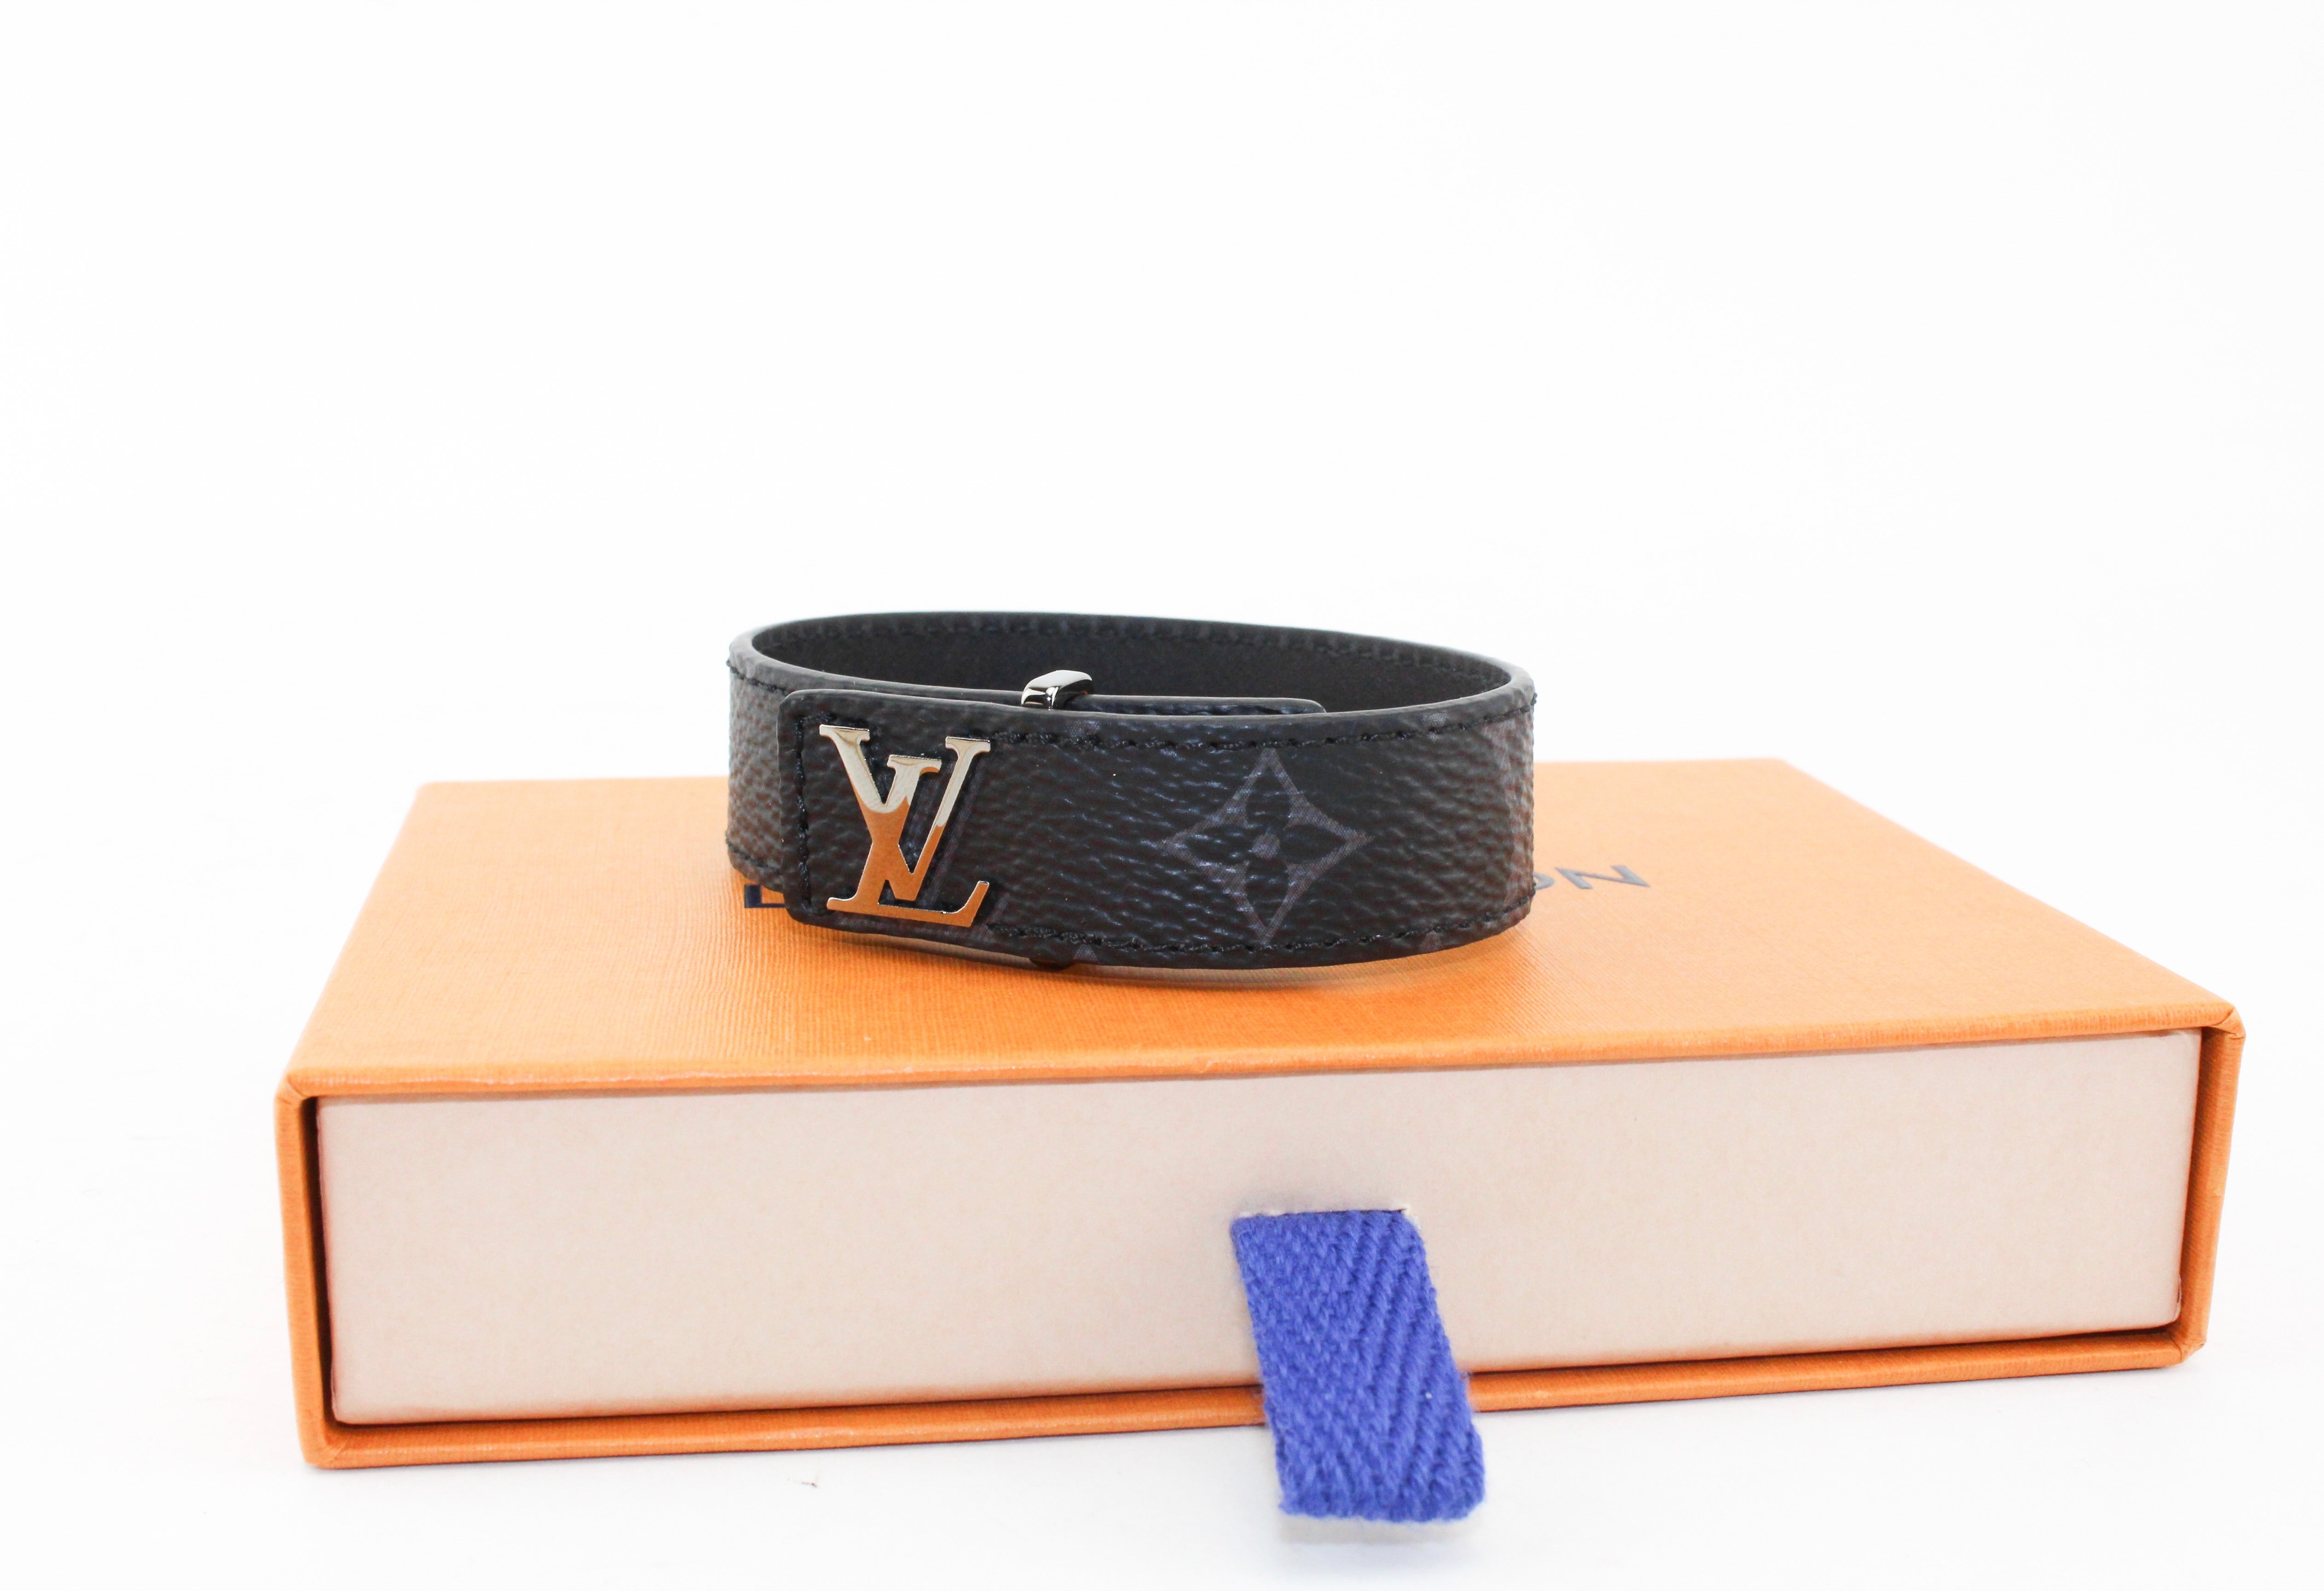 Louis Vuitton LV Slim Bracelet